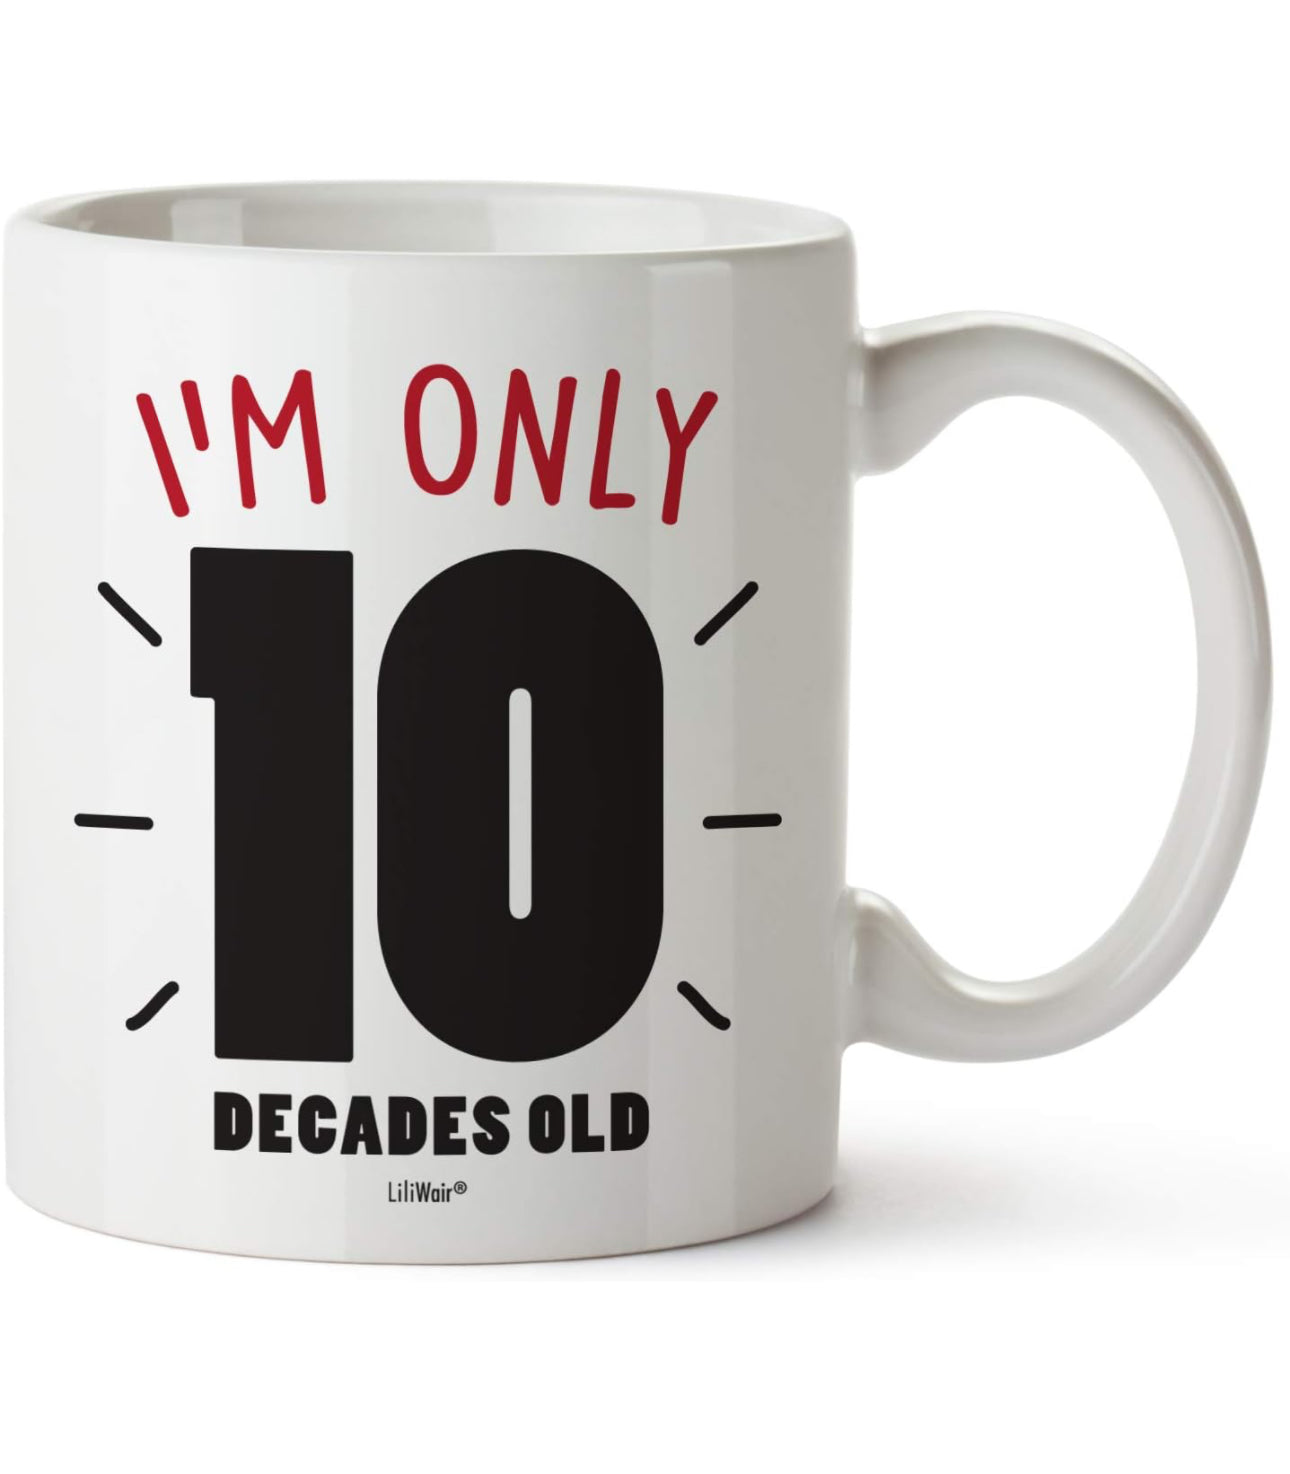 “I’m only 10 decades old” Novelty Mug